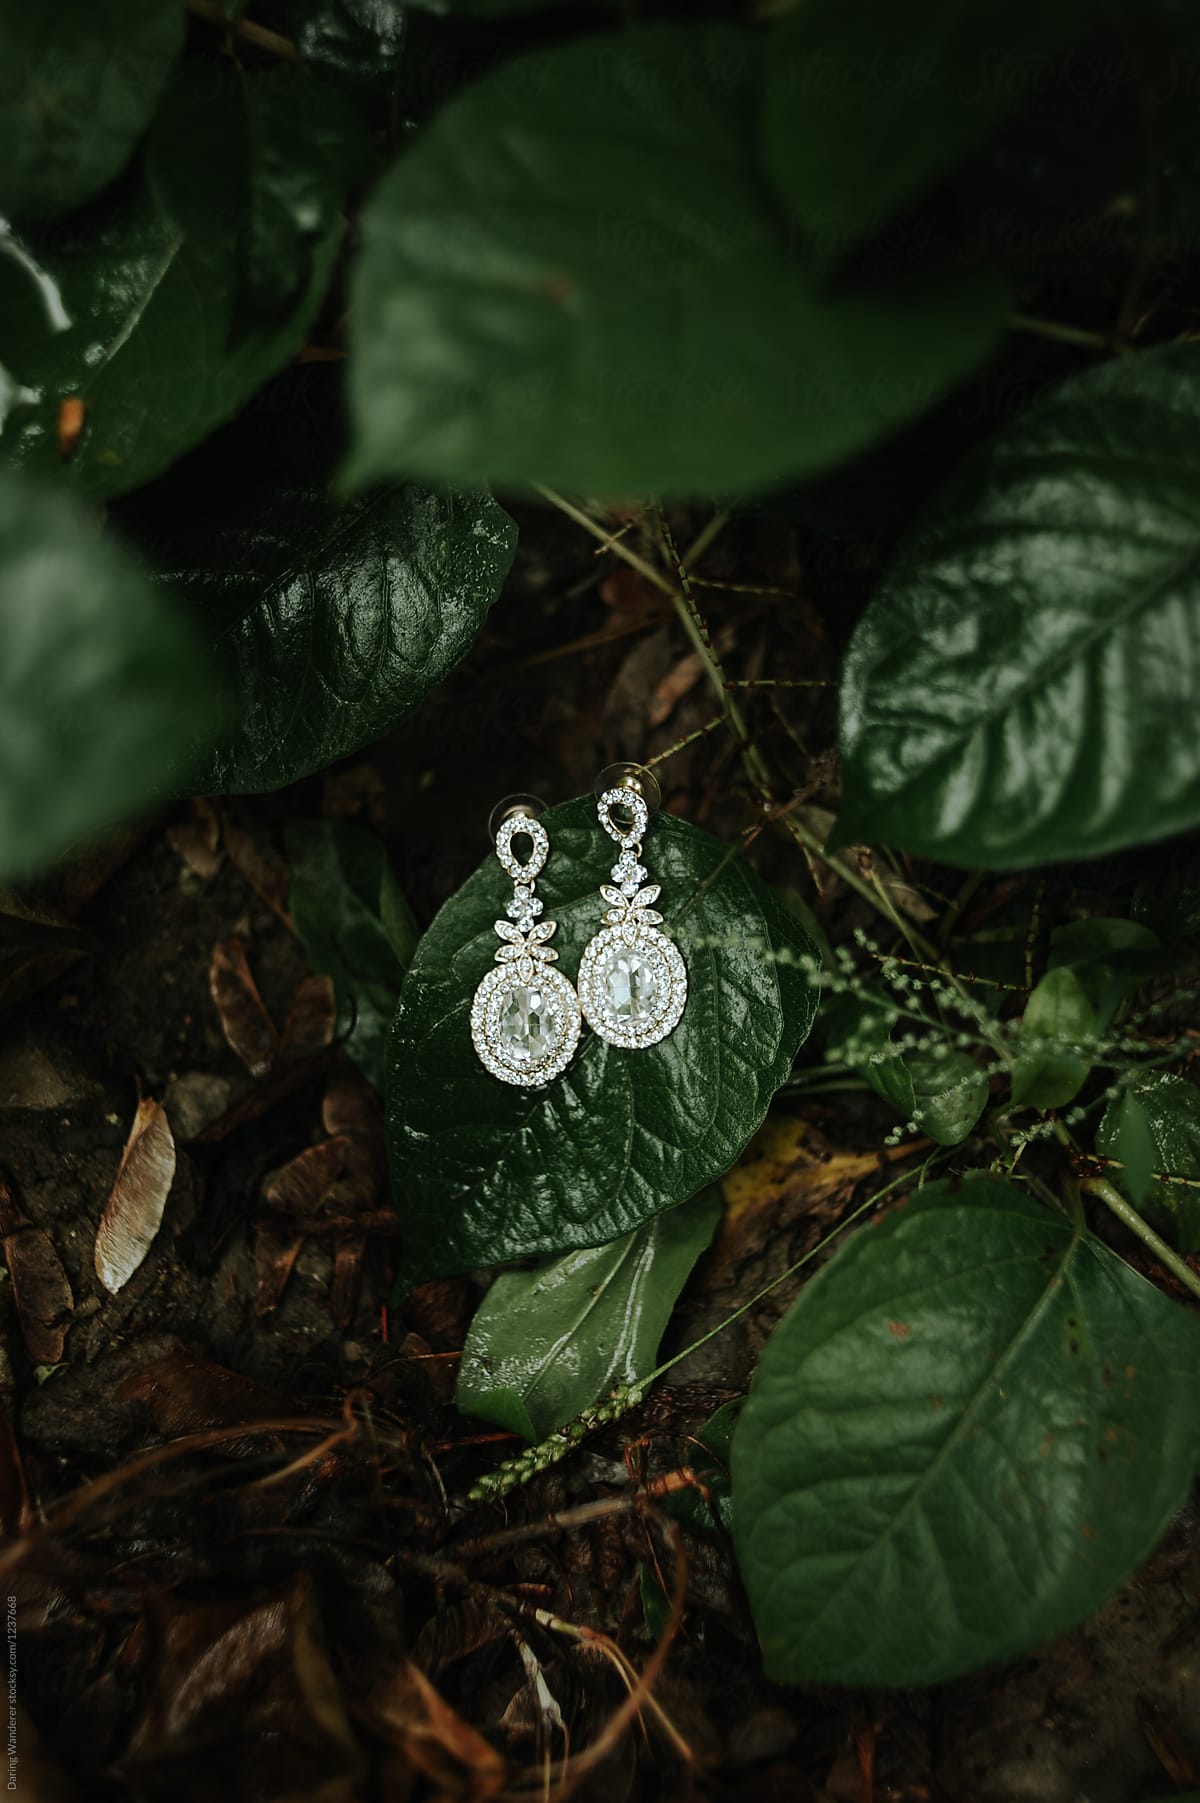 Glamorous crystal chandelier earrings on leaves in overgrown garden